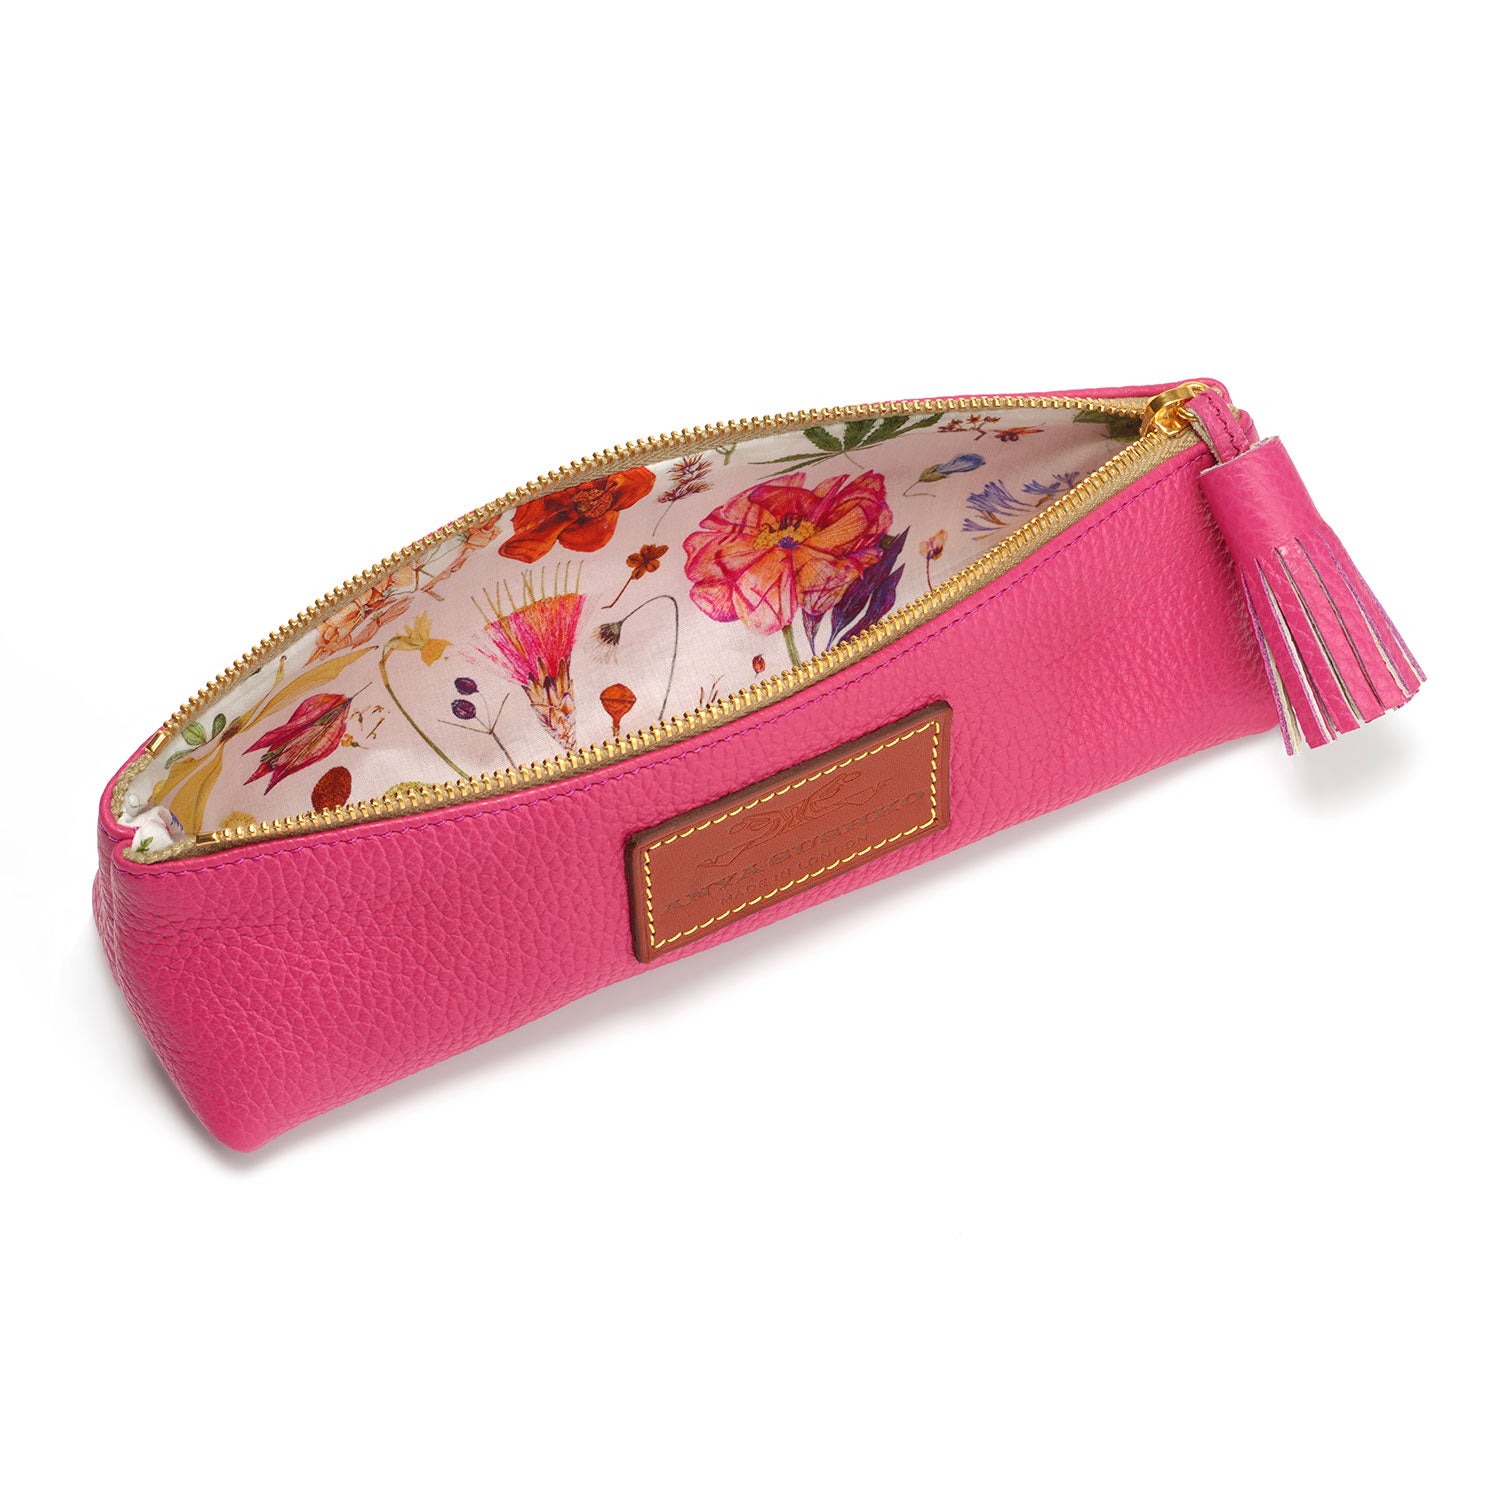 Kate Spade Pink Pencil Case, Kate Spade Pencil Bag